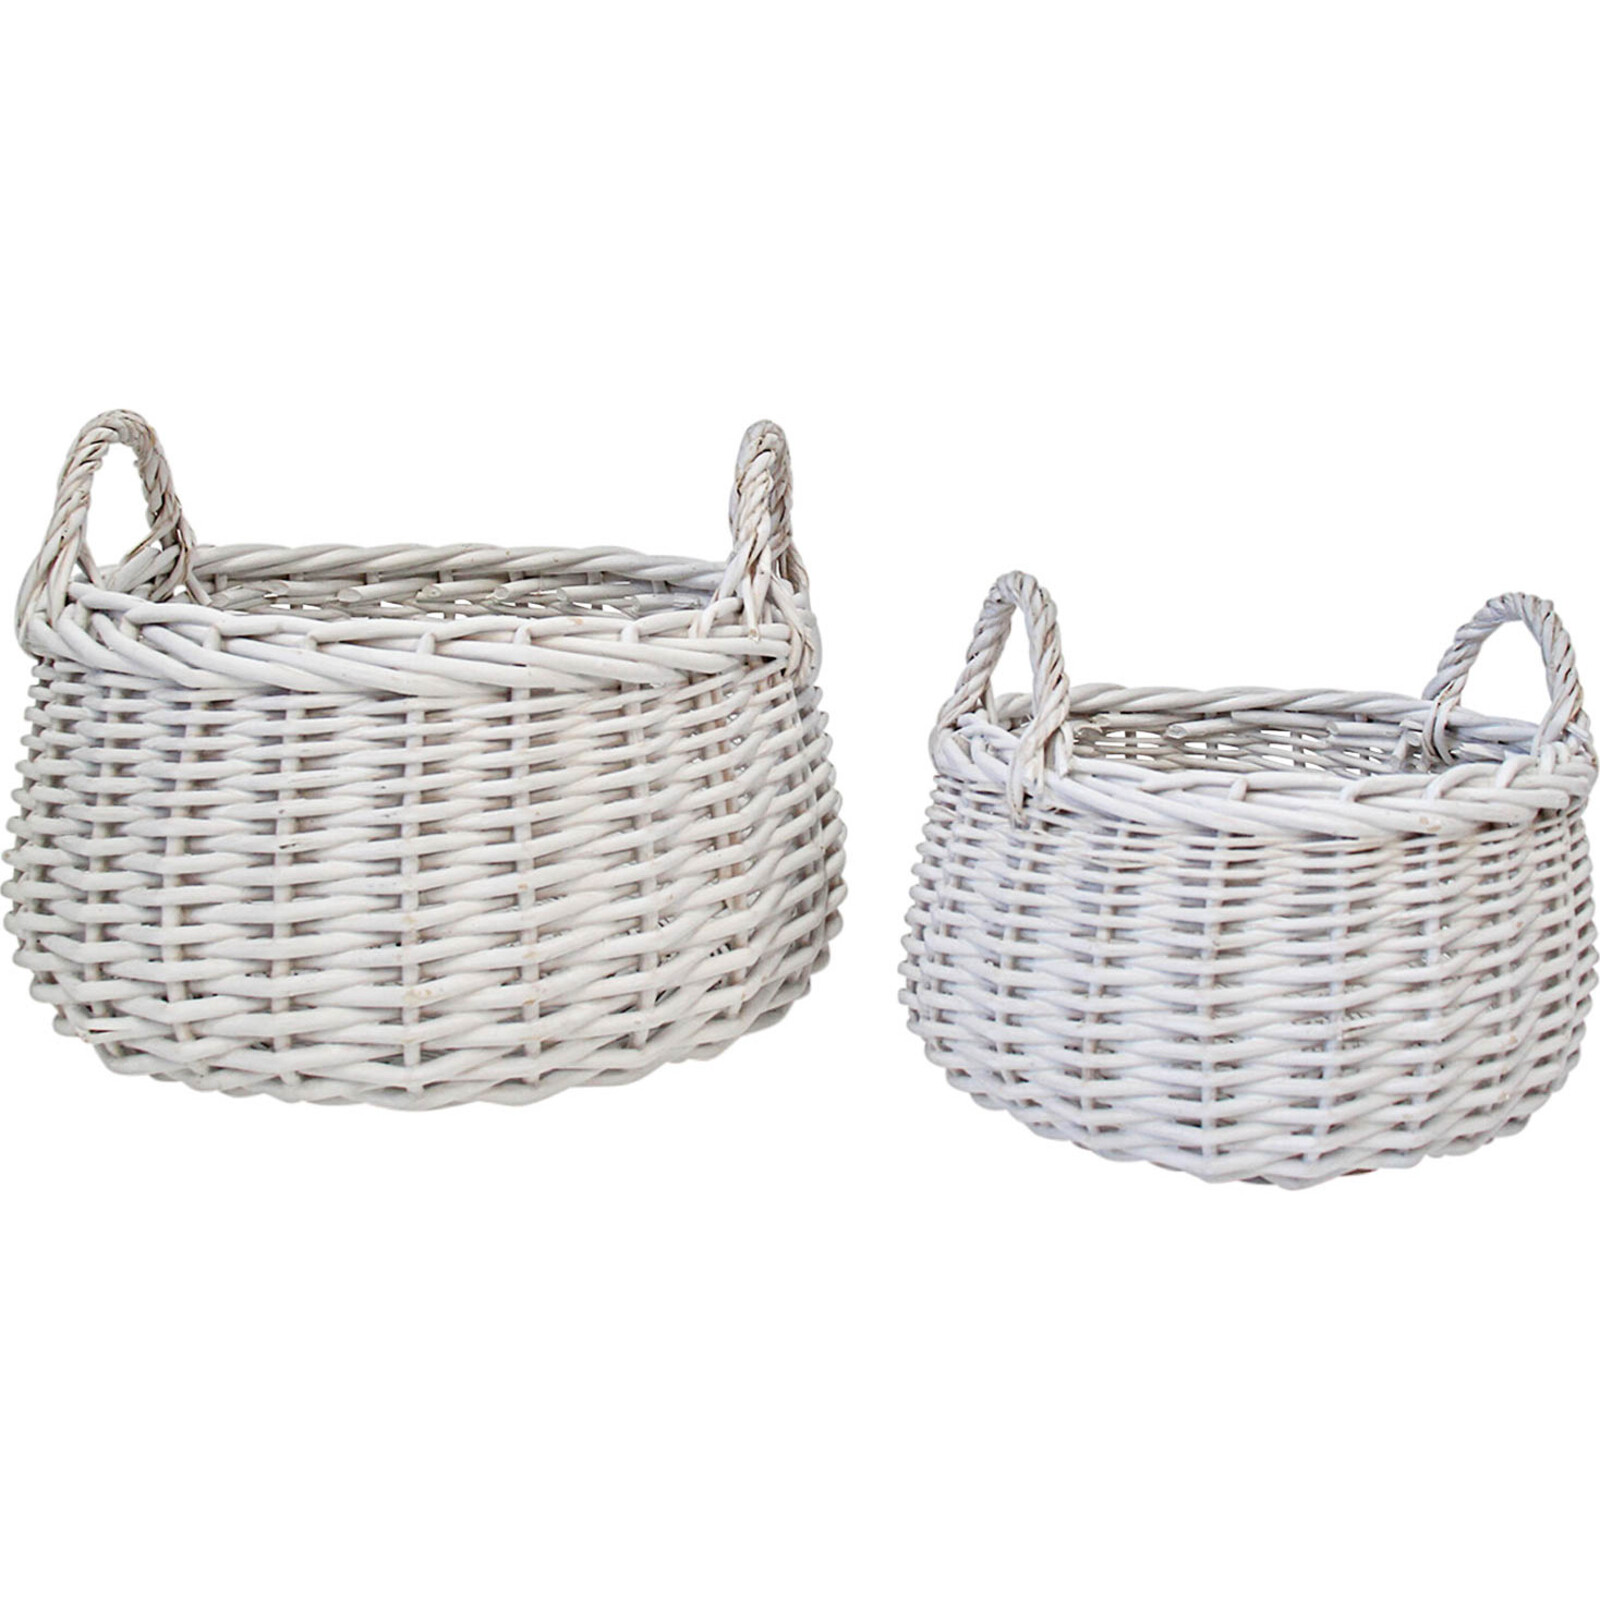 Basket w/ Handle S/2 White